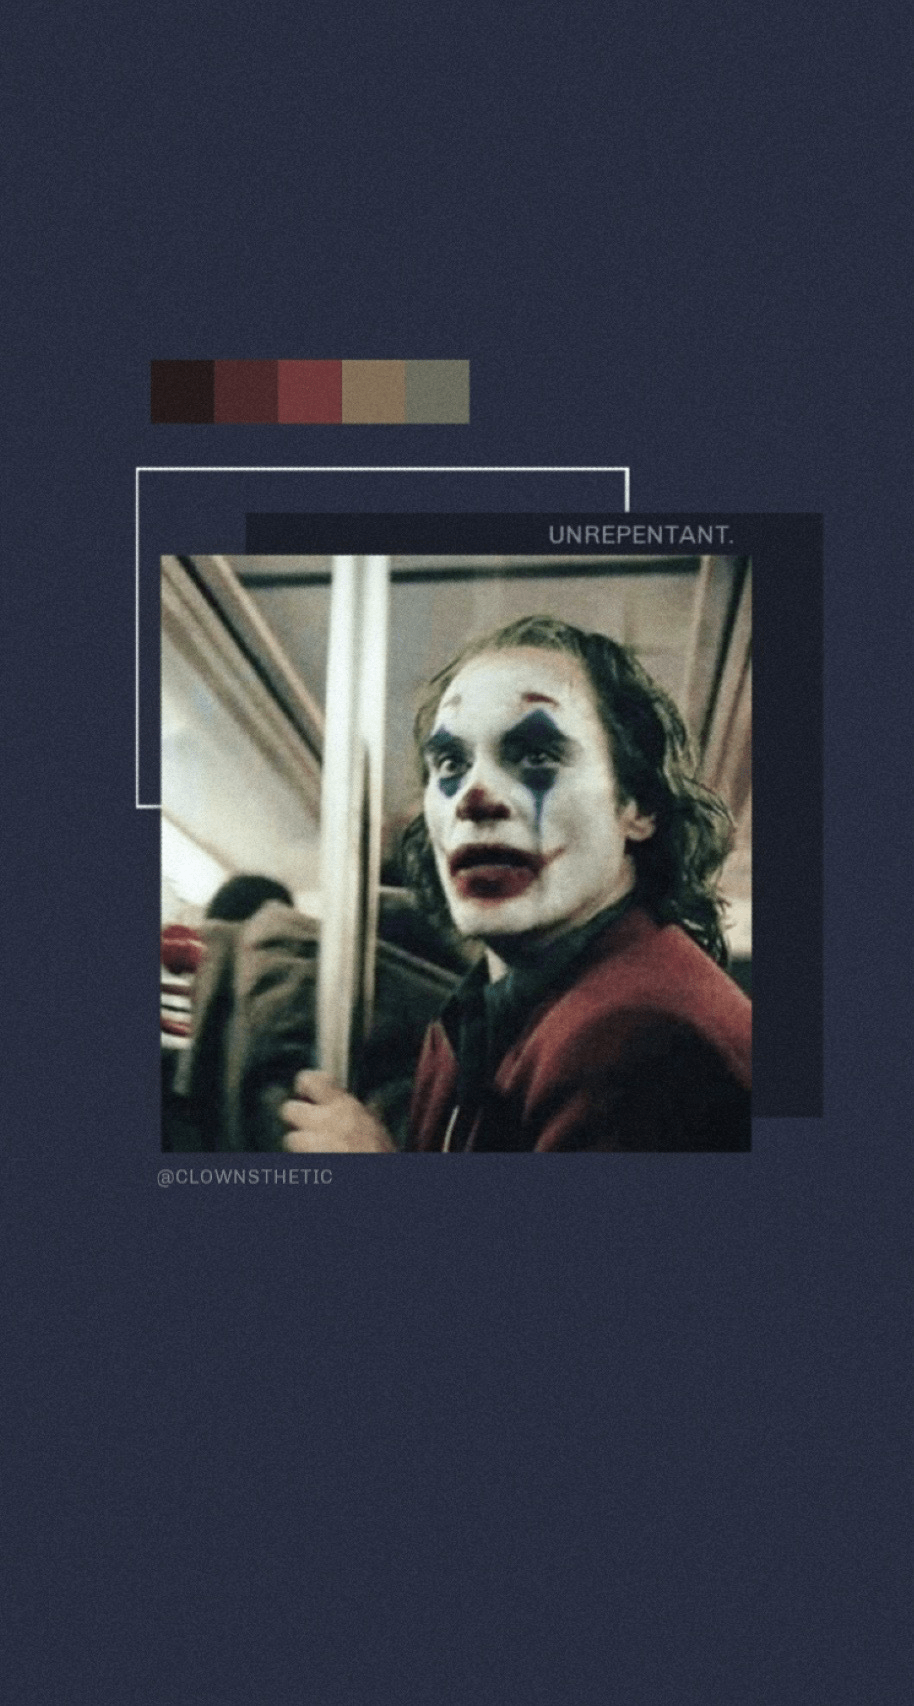 Joker Aesthetic Wallpapers - Top Free Joker Aesthetic Backgrounds ...